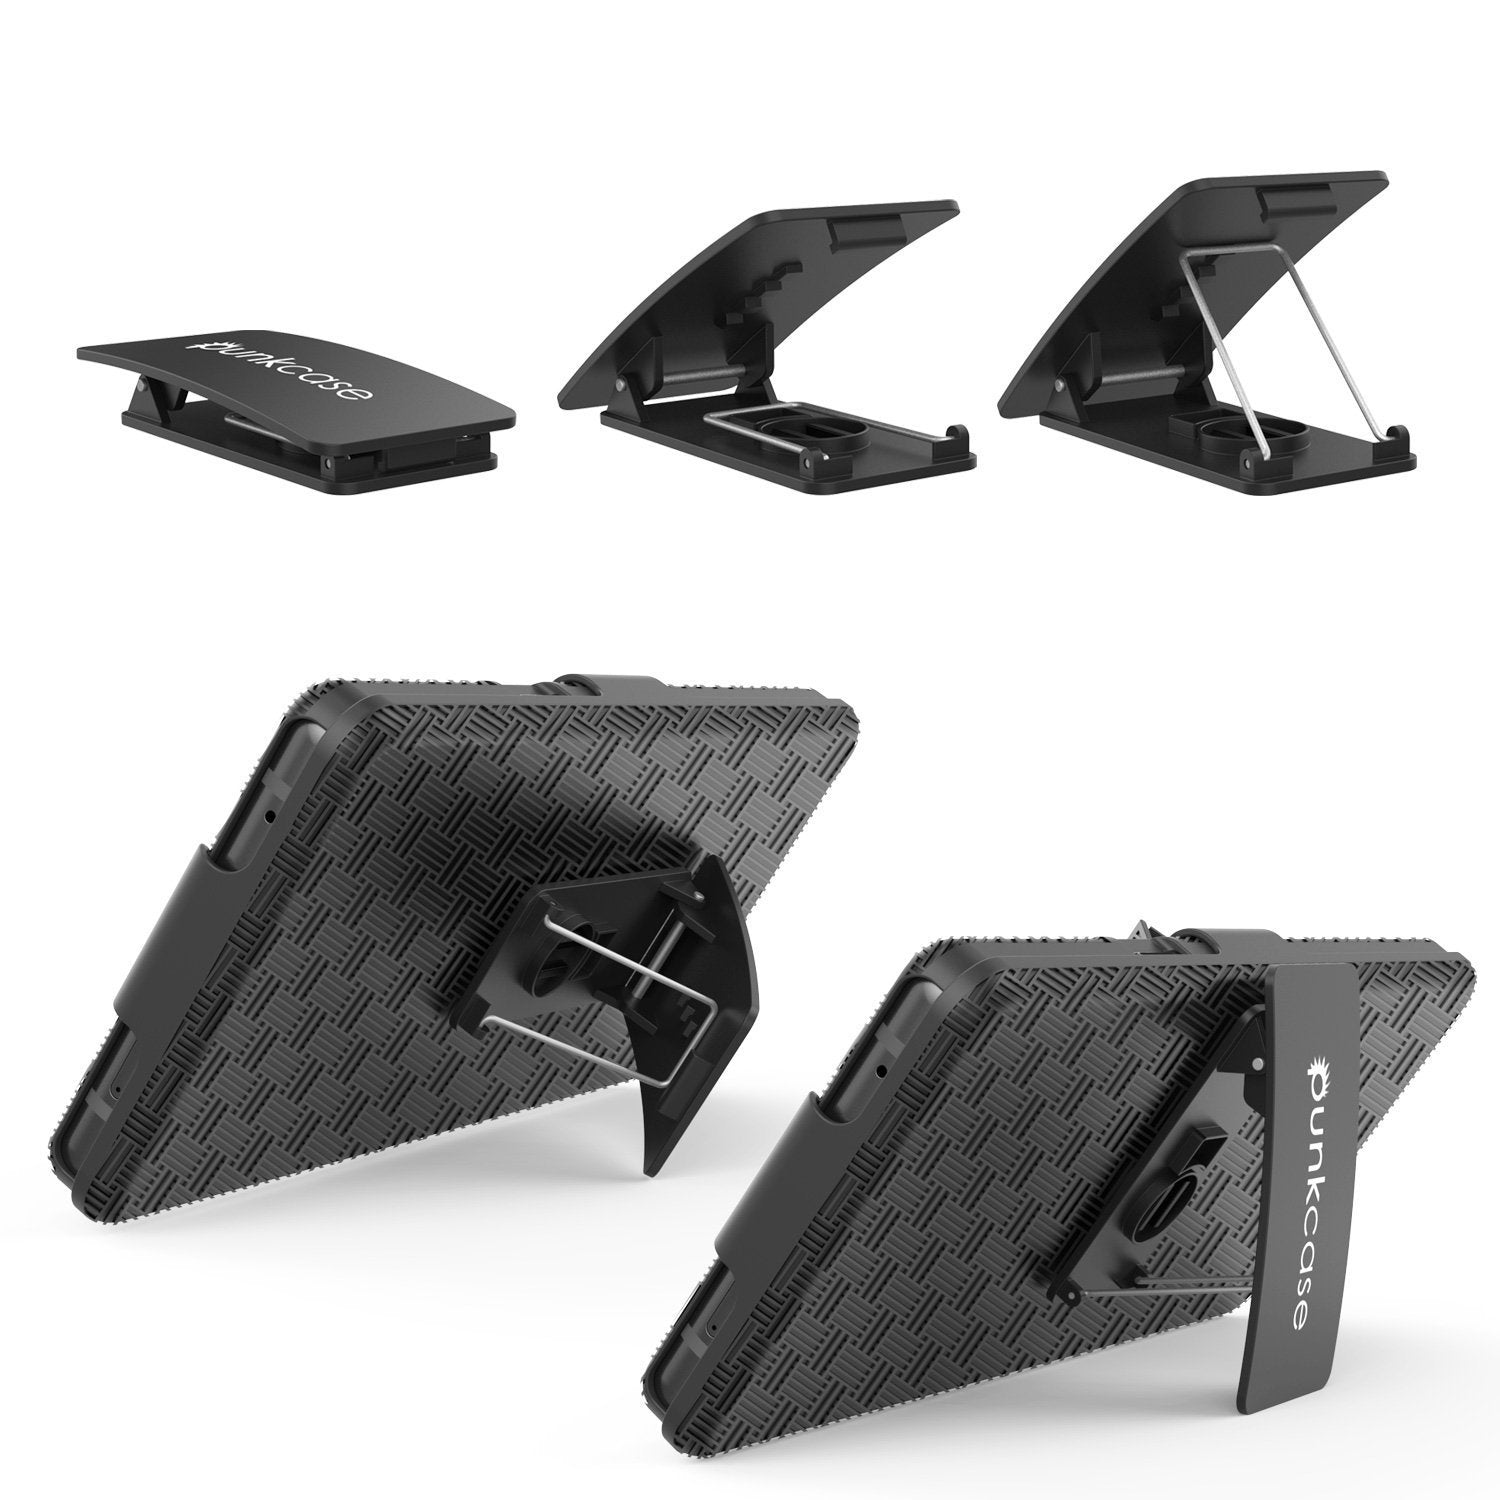 Punkcase Galaxy S8 Case, Holster Belt Clip & Built-In Kickstand [Black]